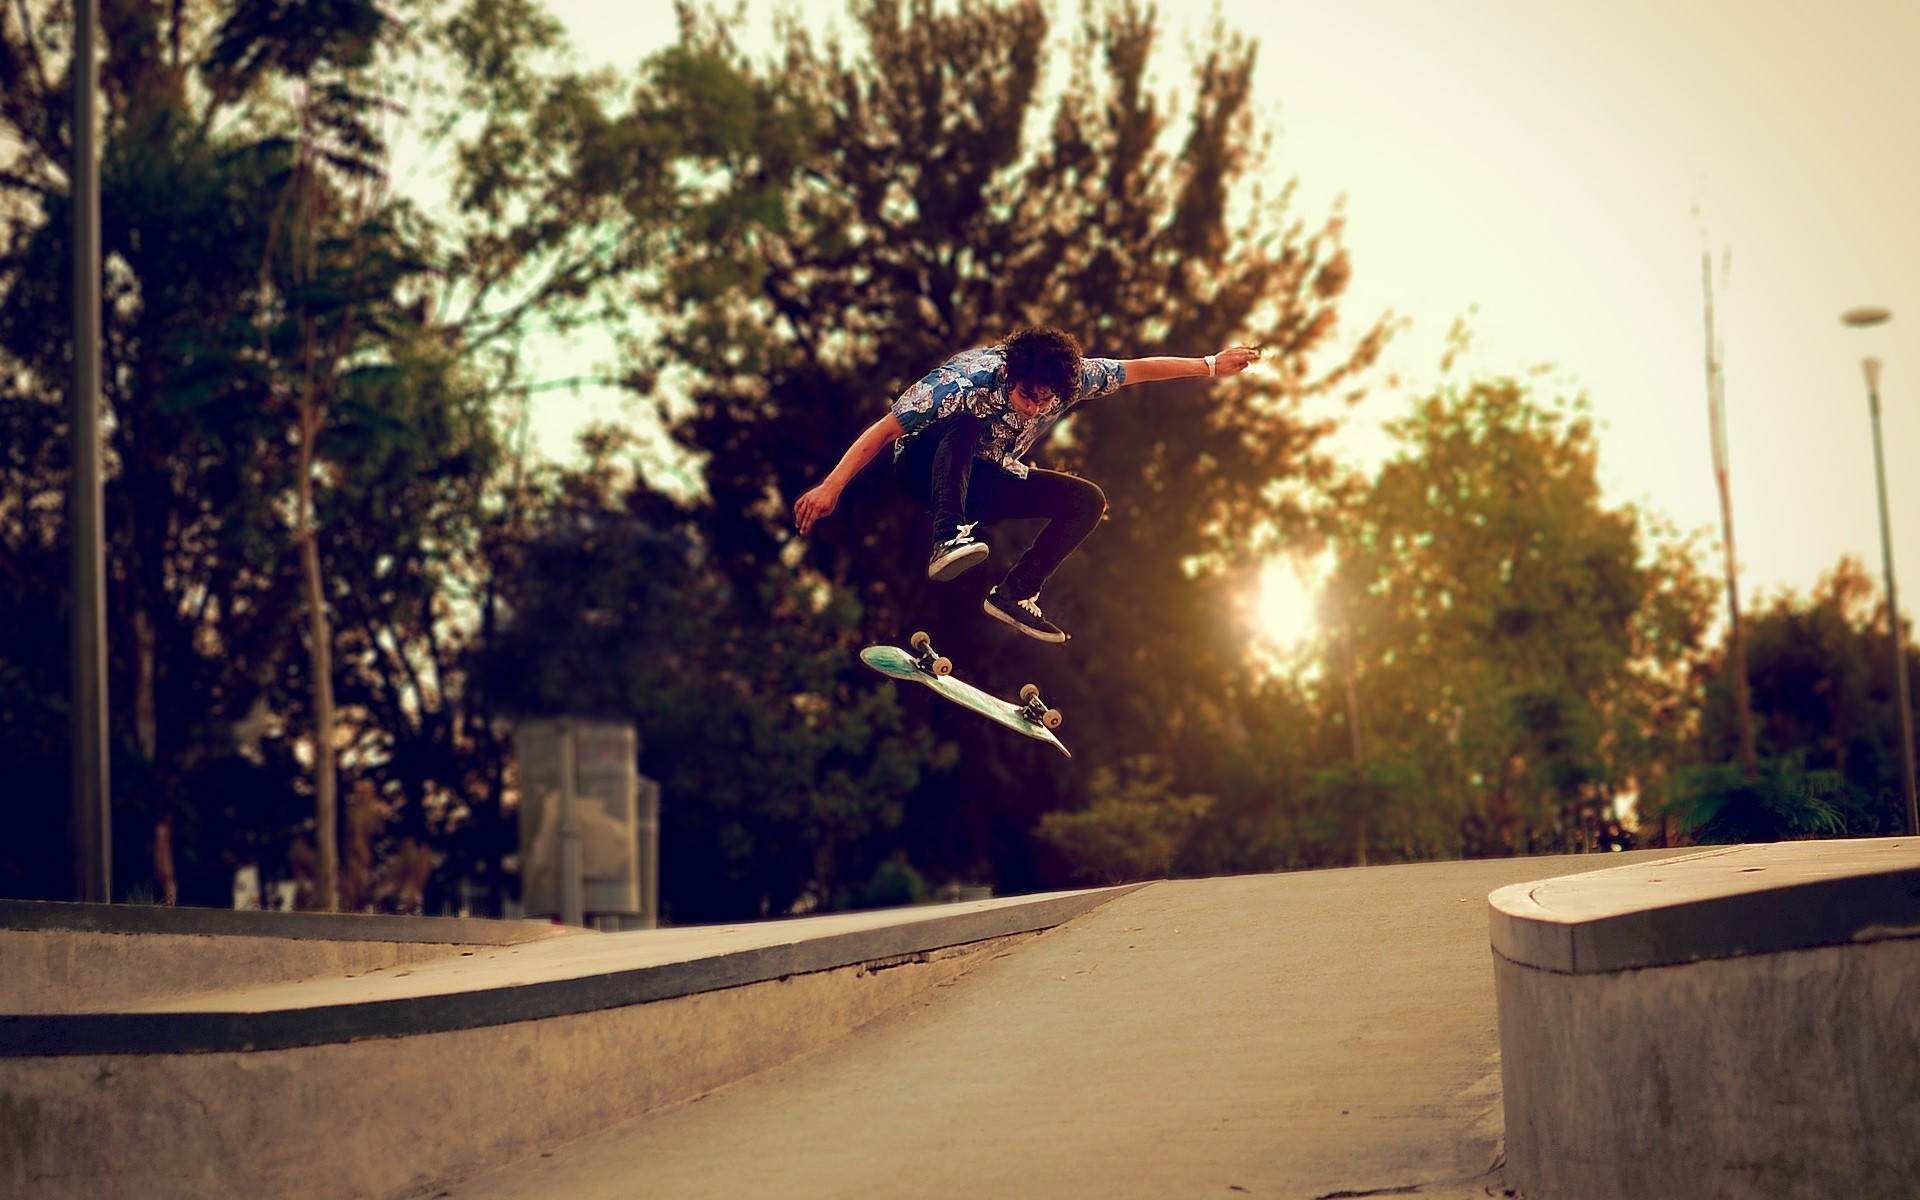 Skater Boy Nollie Trick At Sunset